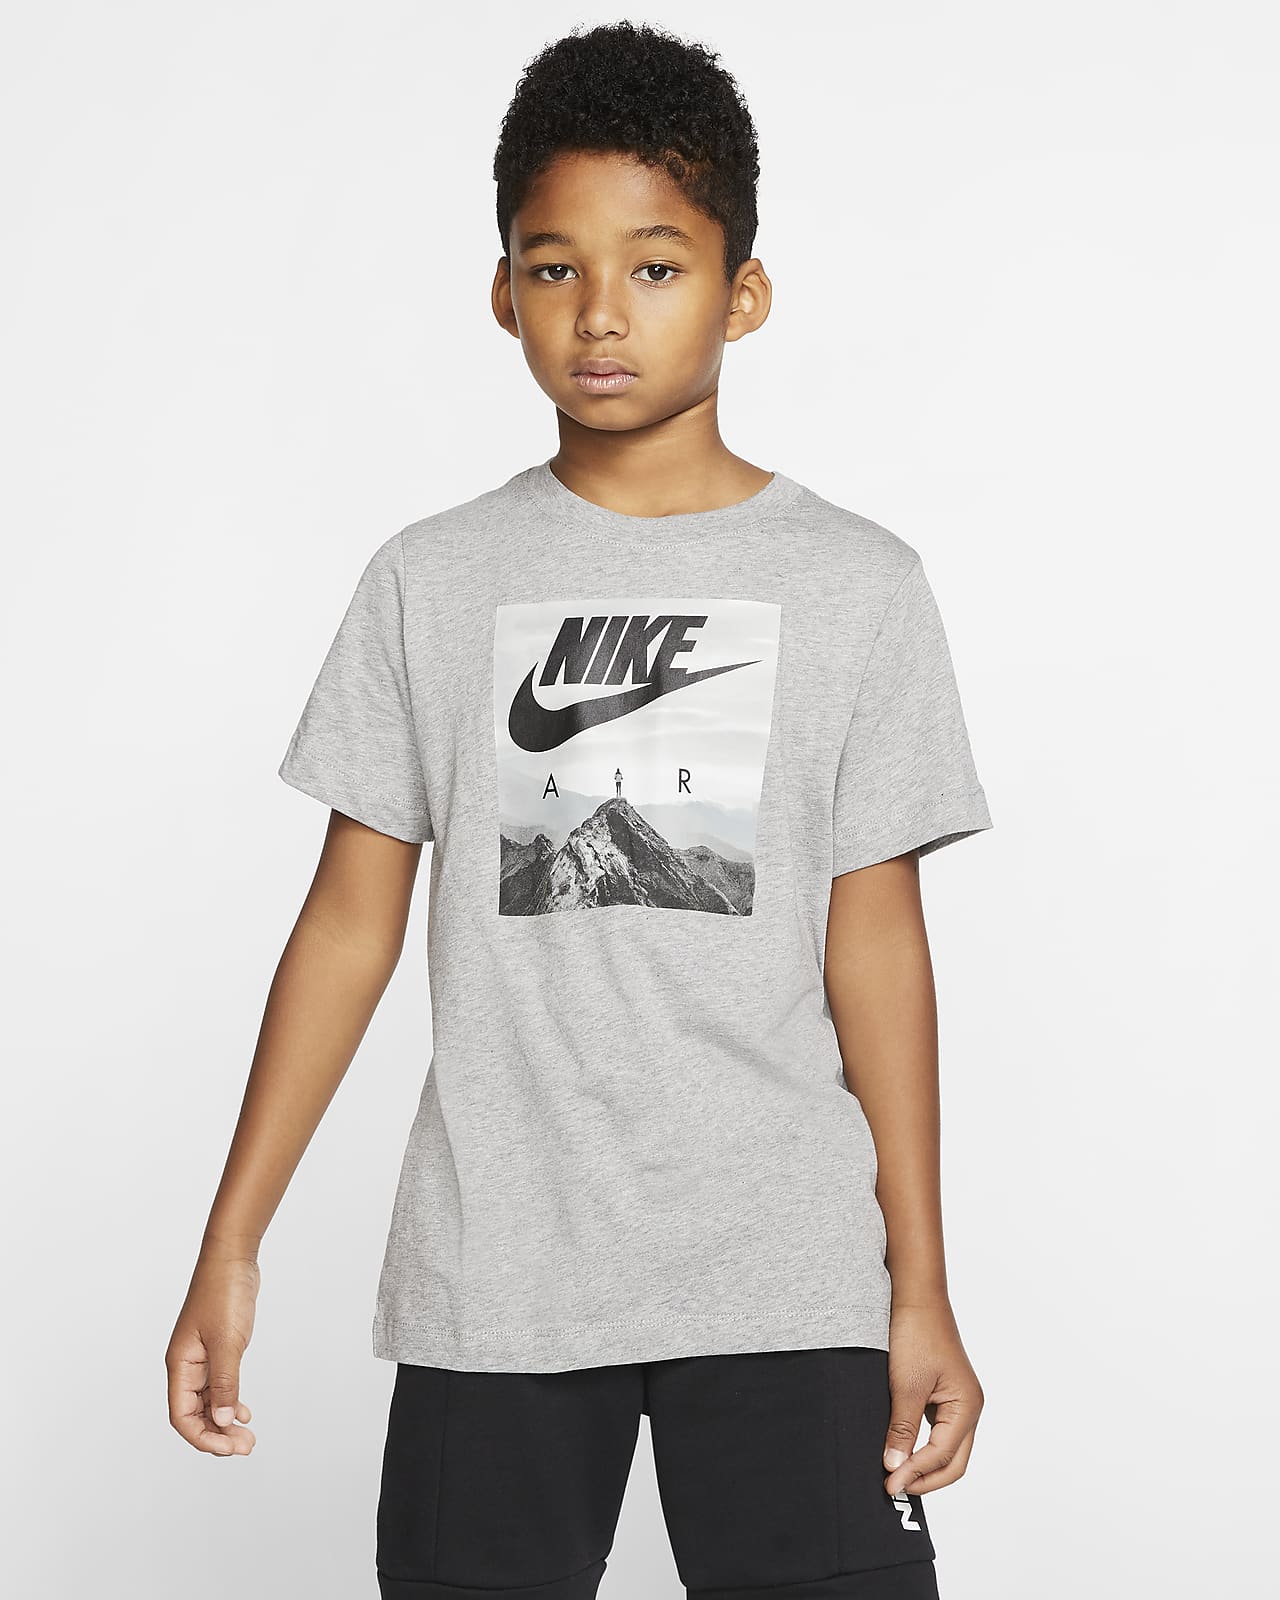  Nike  Air T  Shirt  f r ltere Kinder Jungen Nike  CH